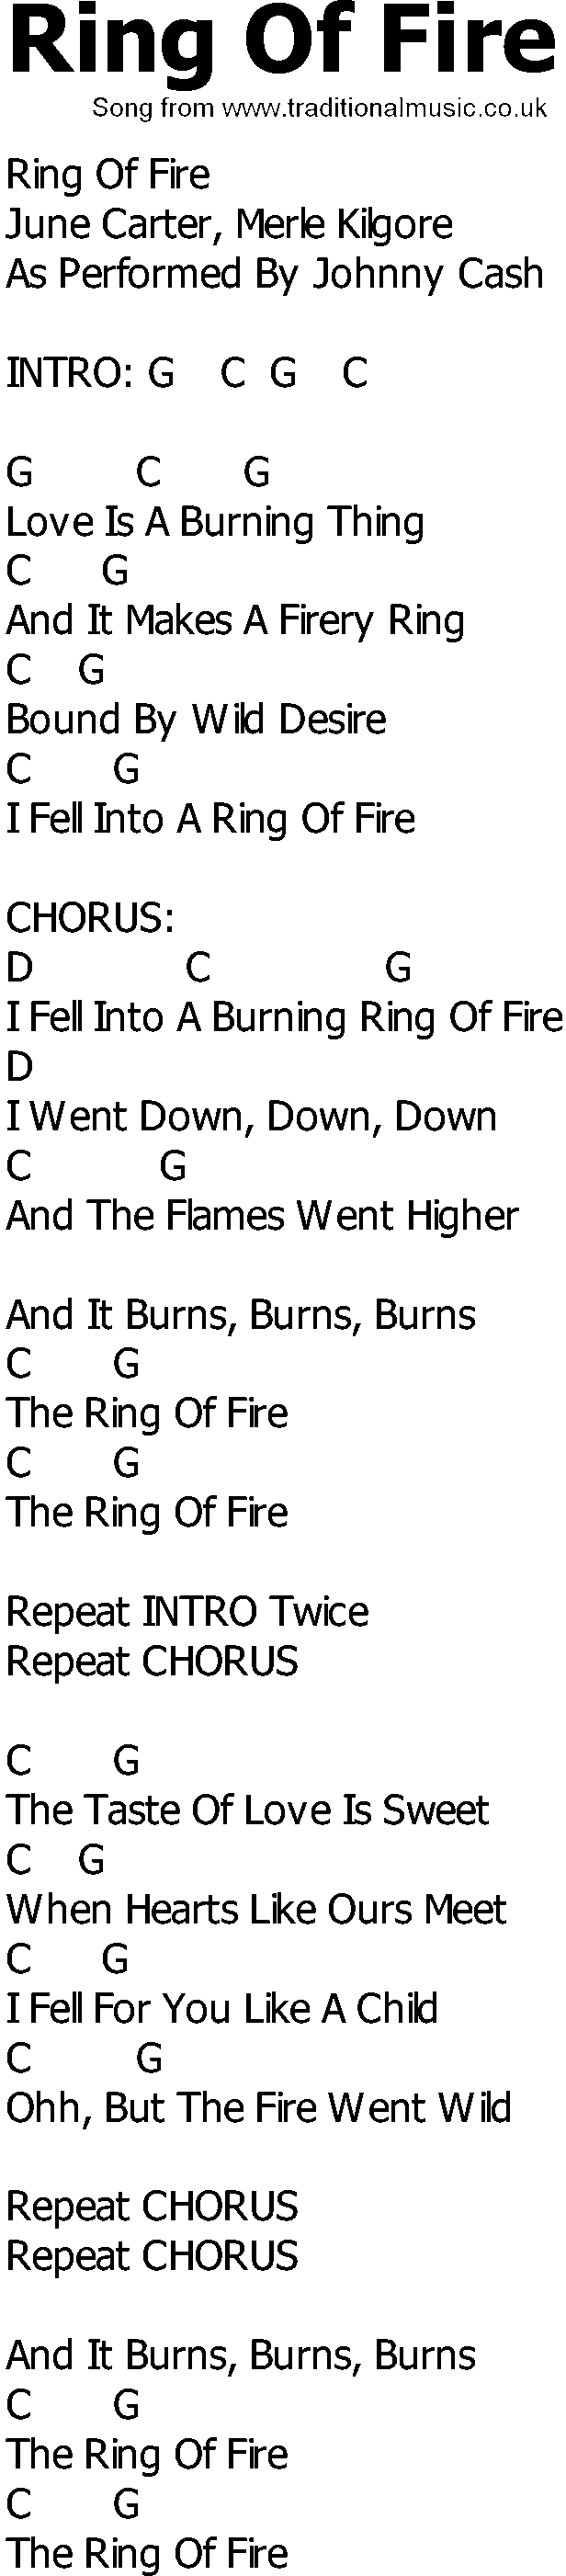 Ring of Fire-Lyrics-Johnny Cash-KKBOX